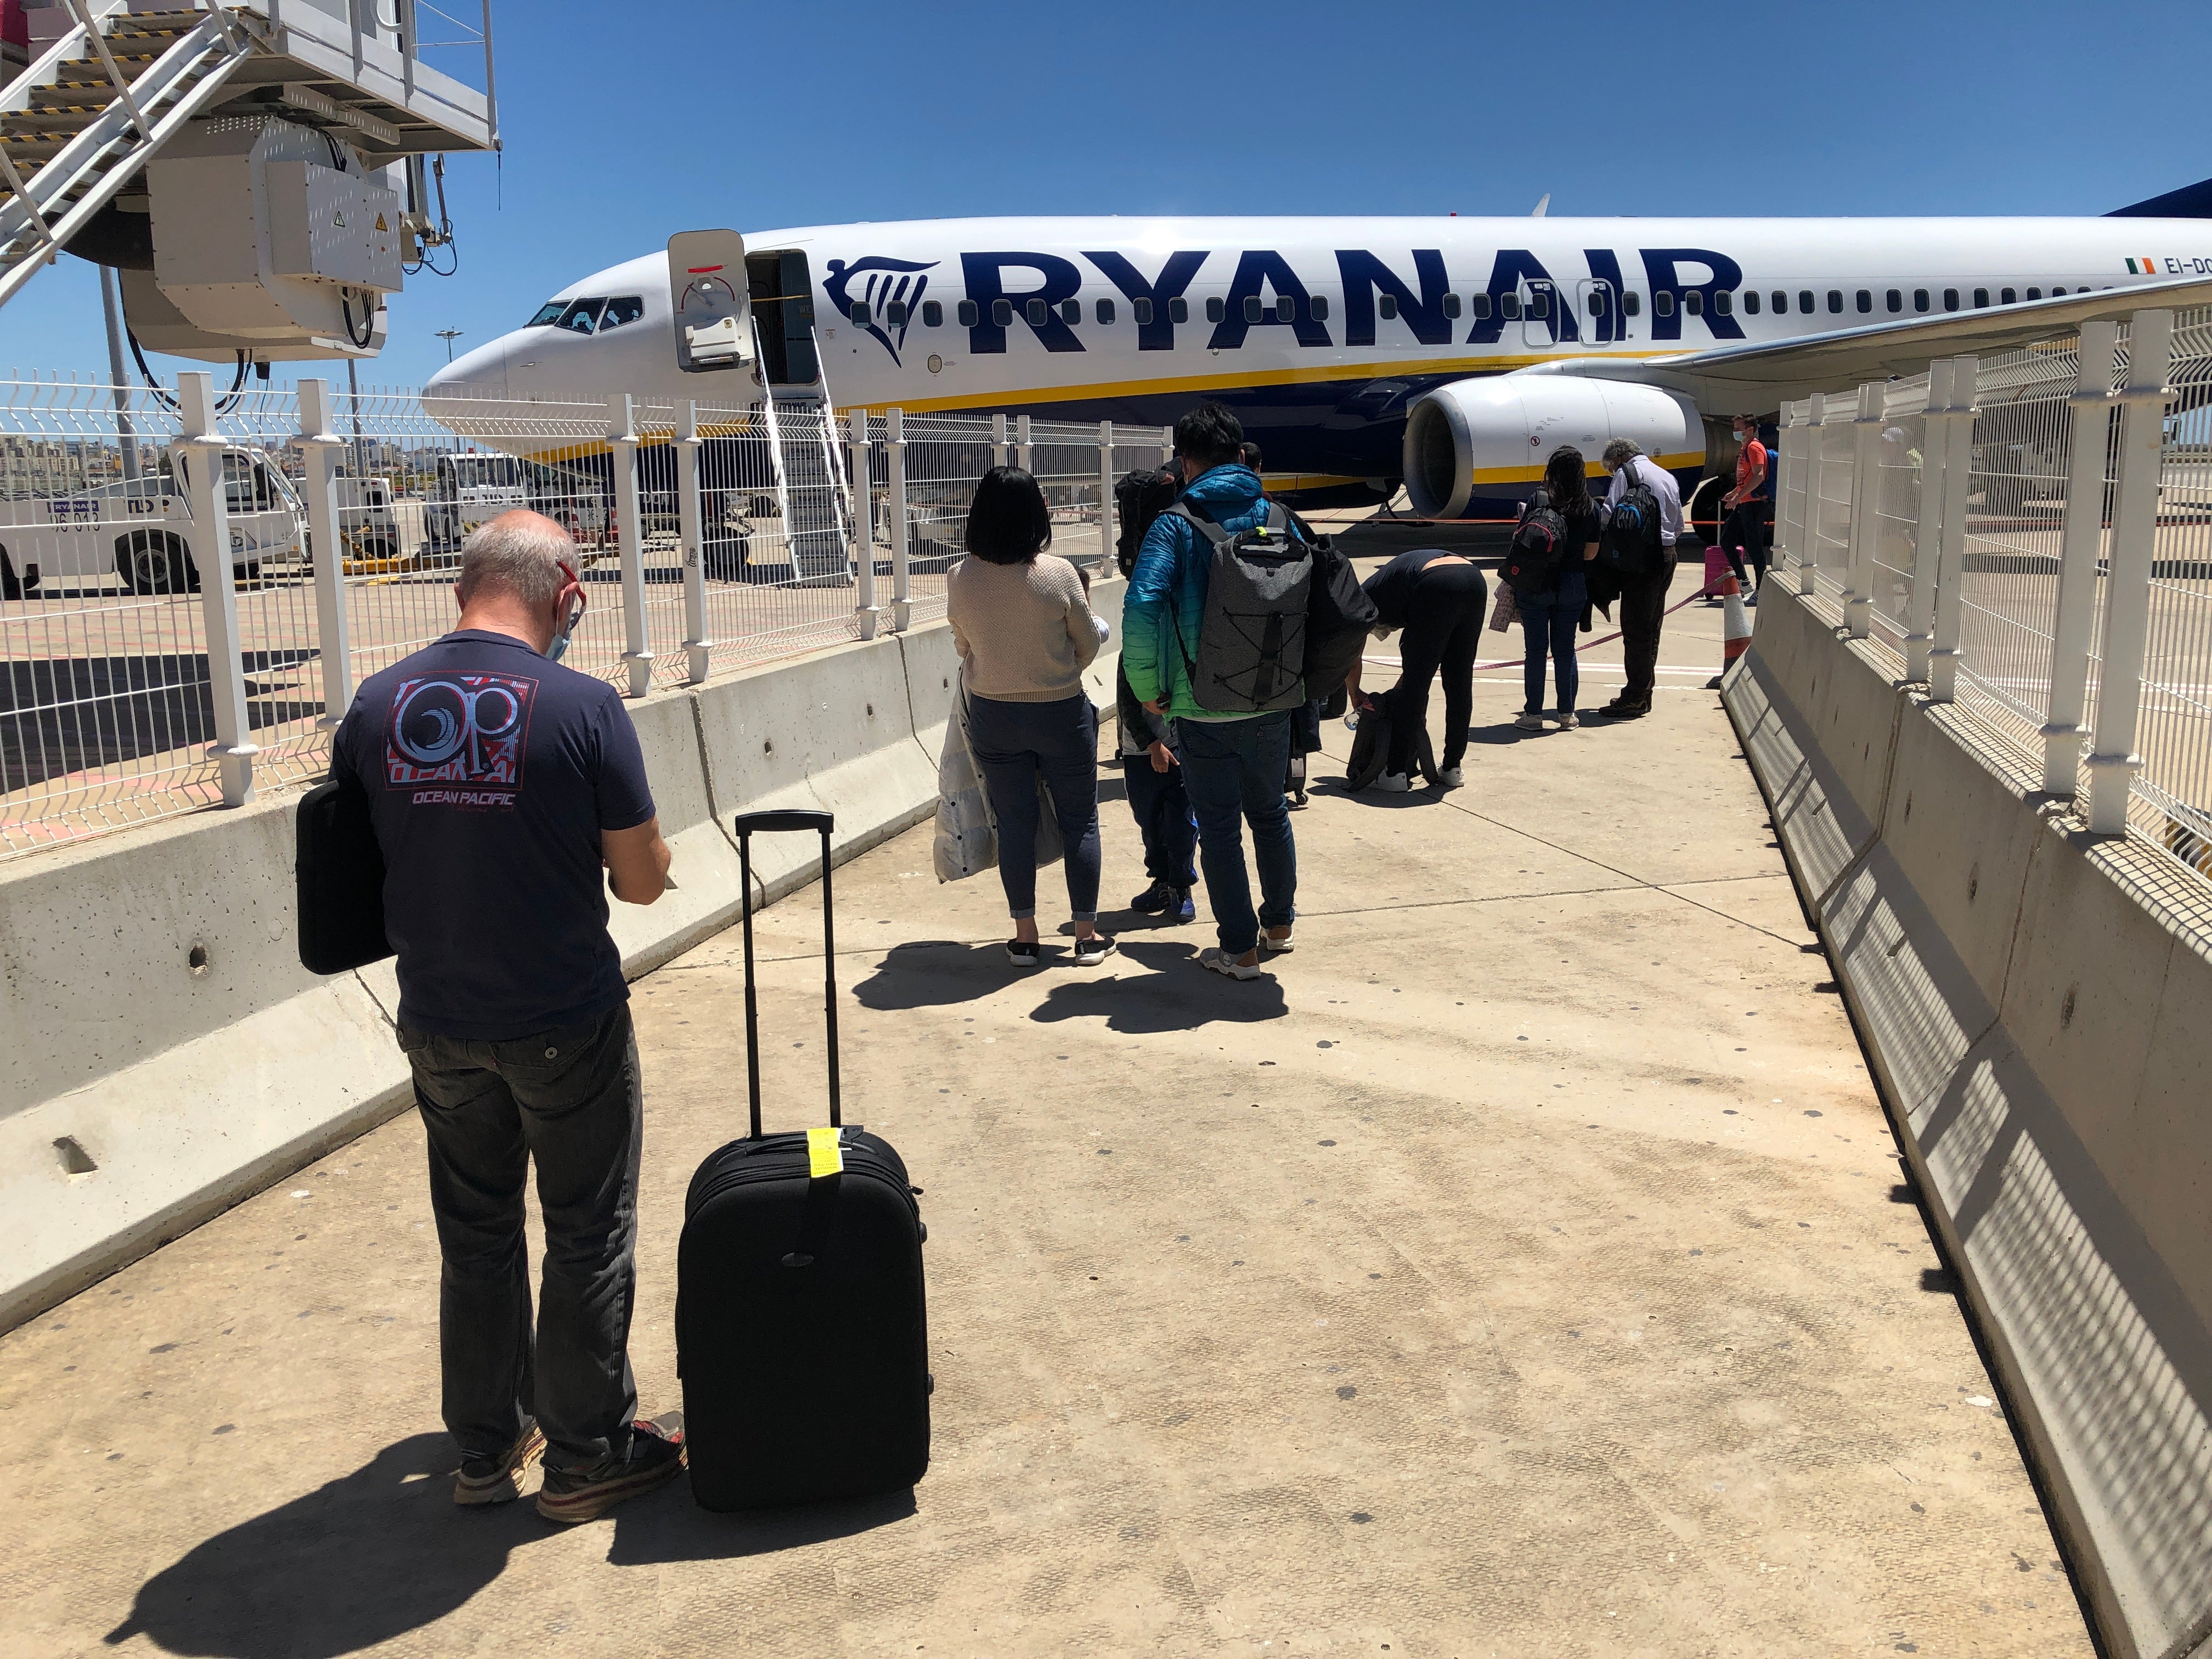 Departing soon: Ryanair aircraft at Faro airport in Portugal